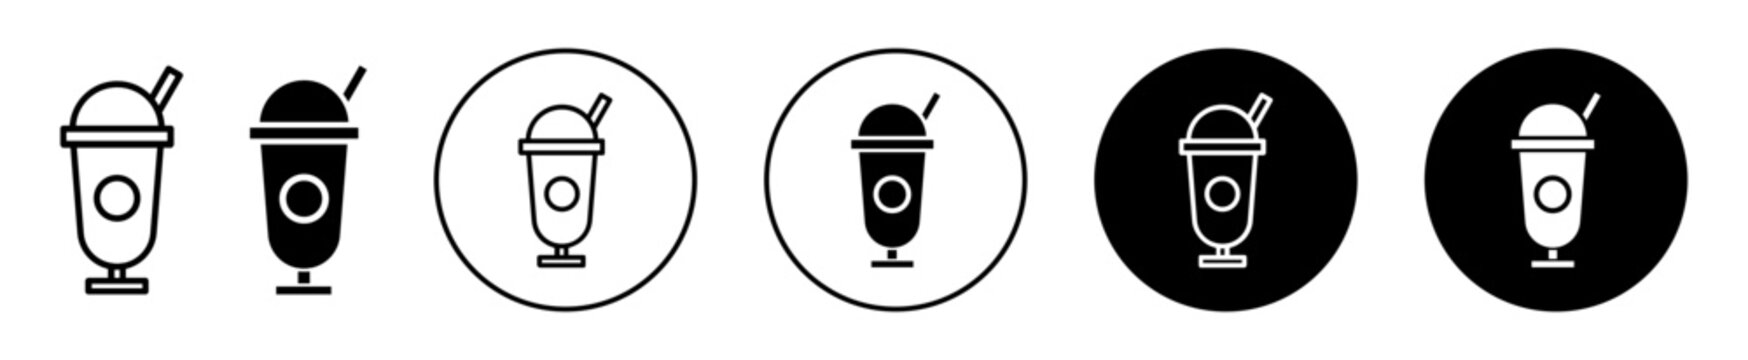 Milk shake icon. smoothie cocktail juice beverage drink cup symbol logo mark. milkshake or hot cold coffee latte or tea soda with ice cream vector set